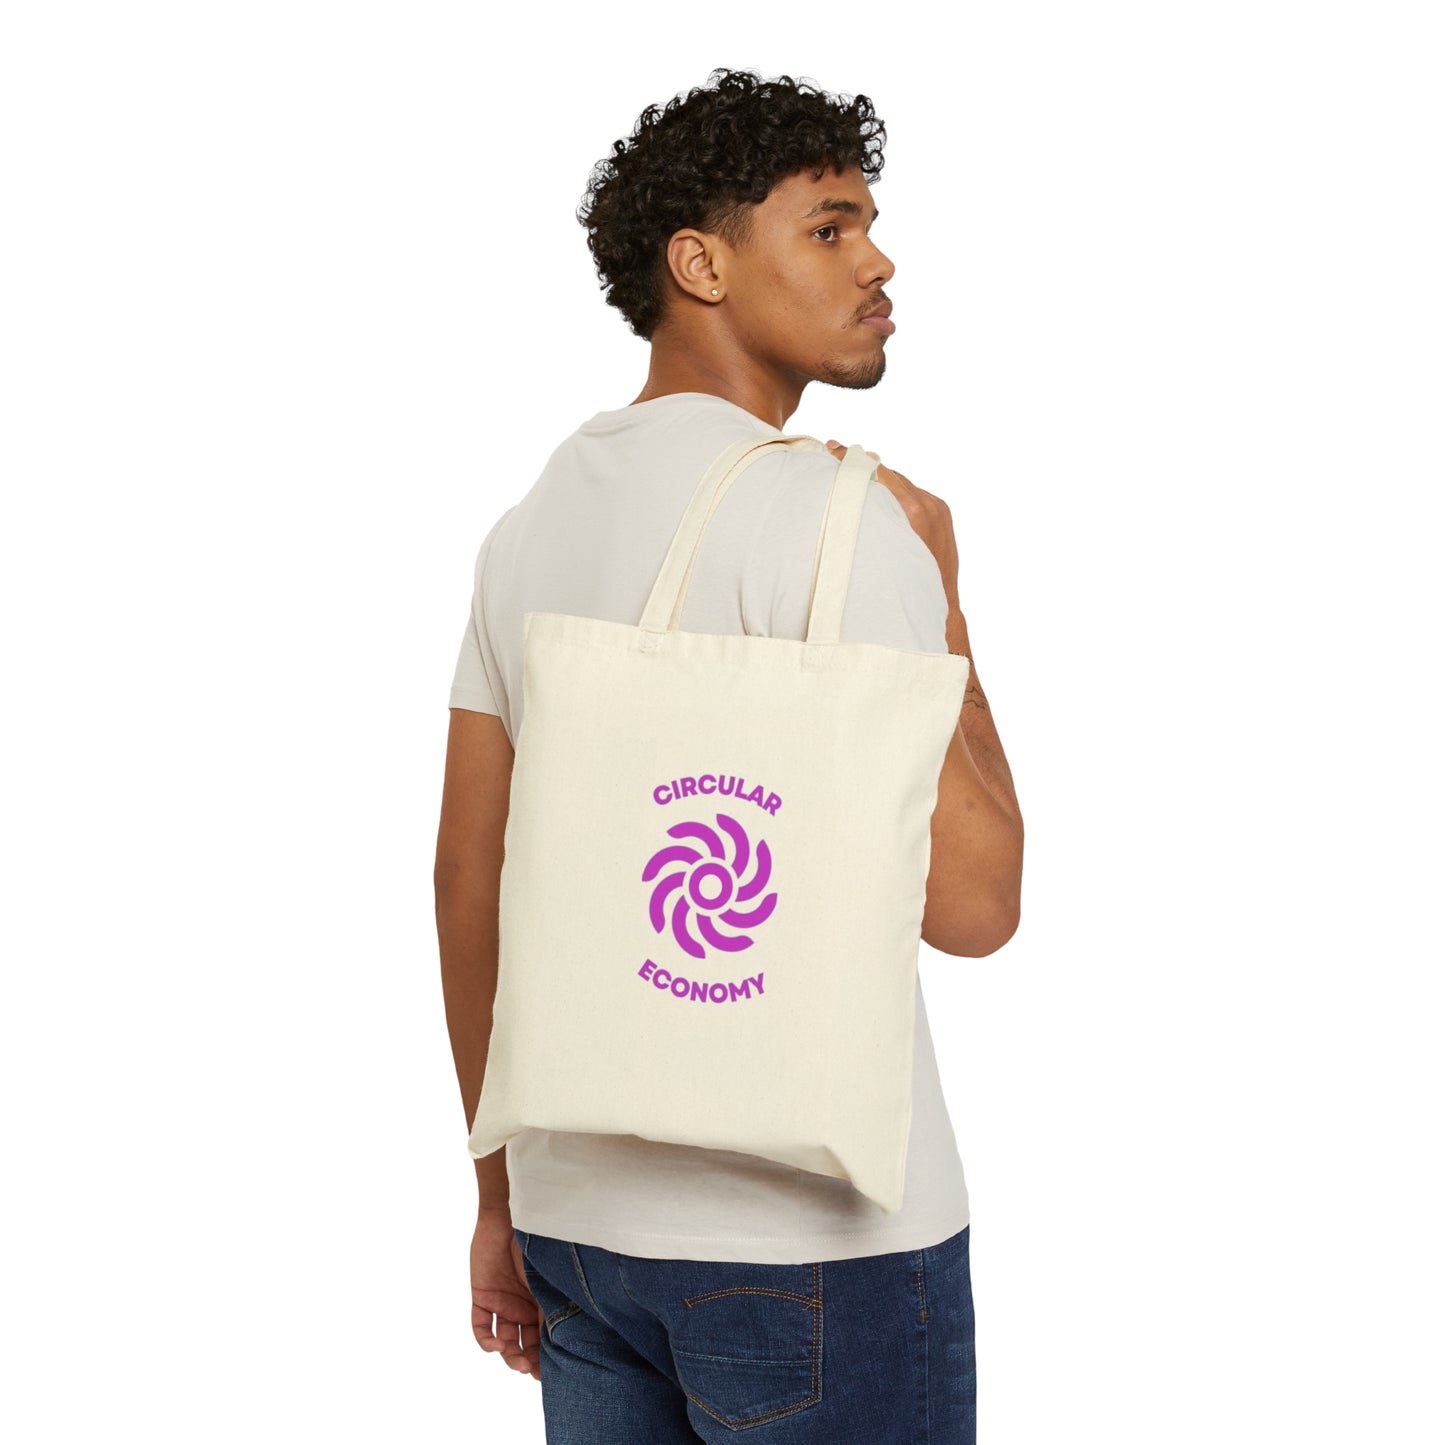 Circular Economy, Cotton Canvas Tote Bag